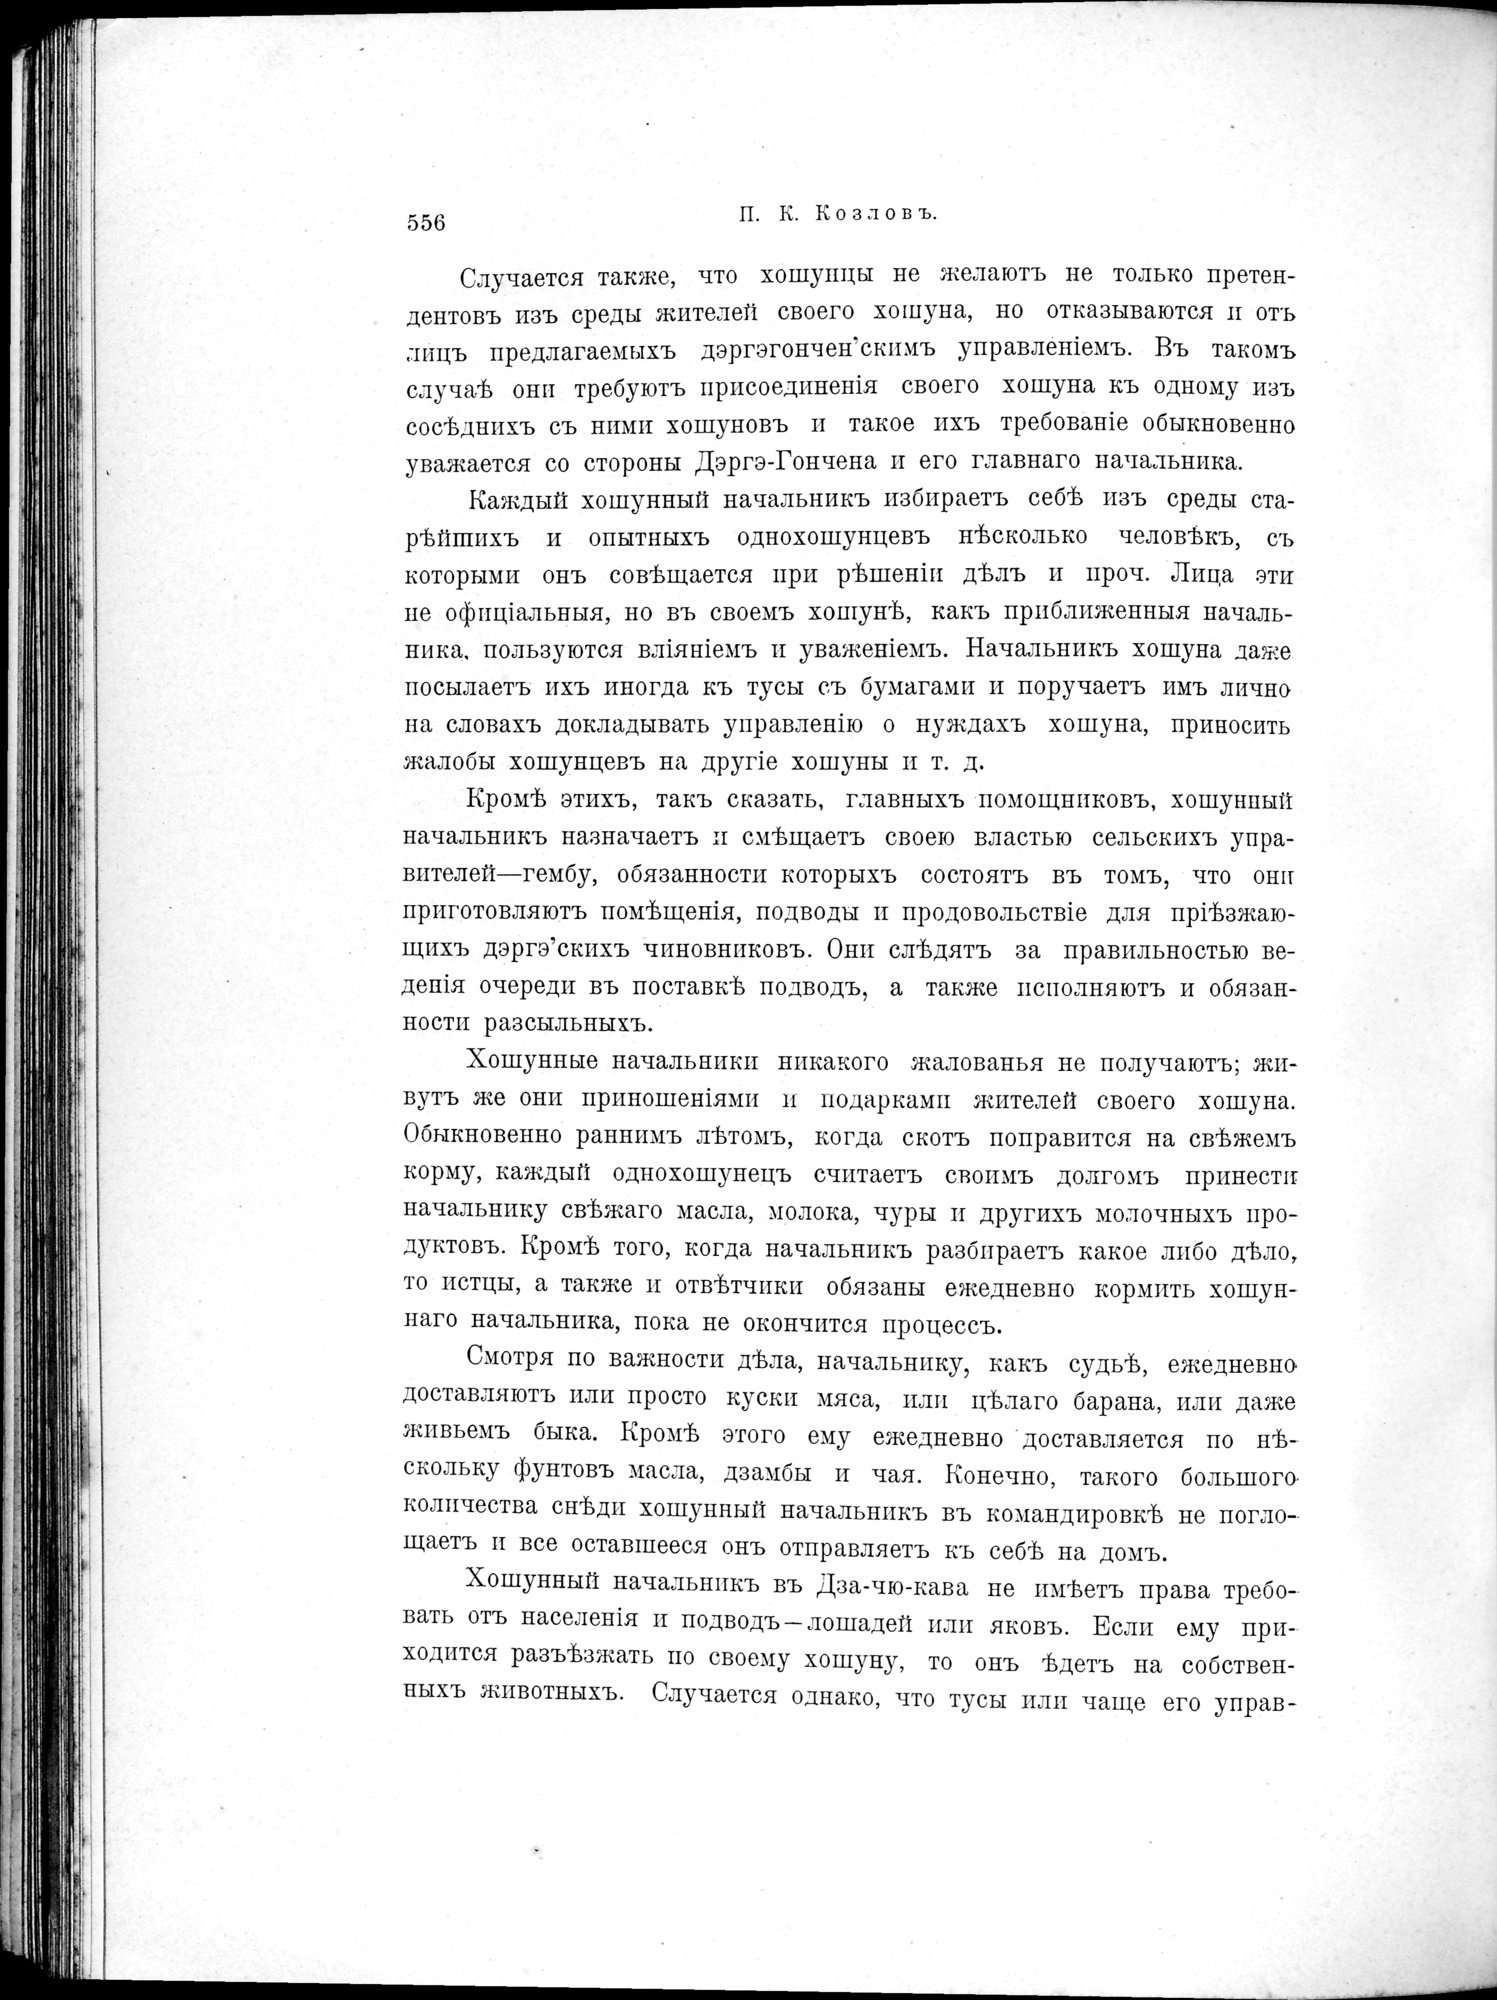 Mongoliia i Kam : vol.2 / Page 380 (Grayscale High Resolution Image)